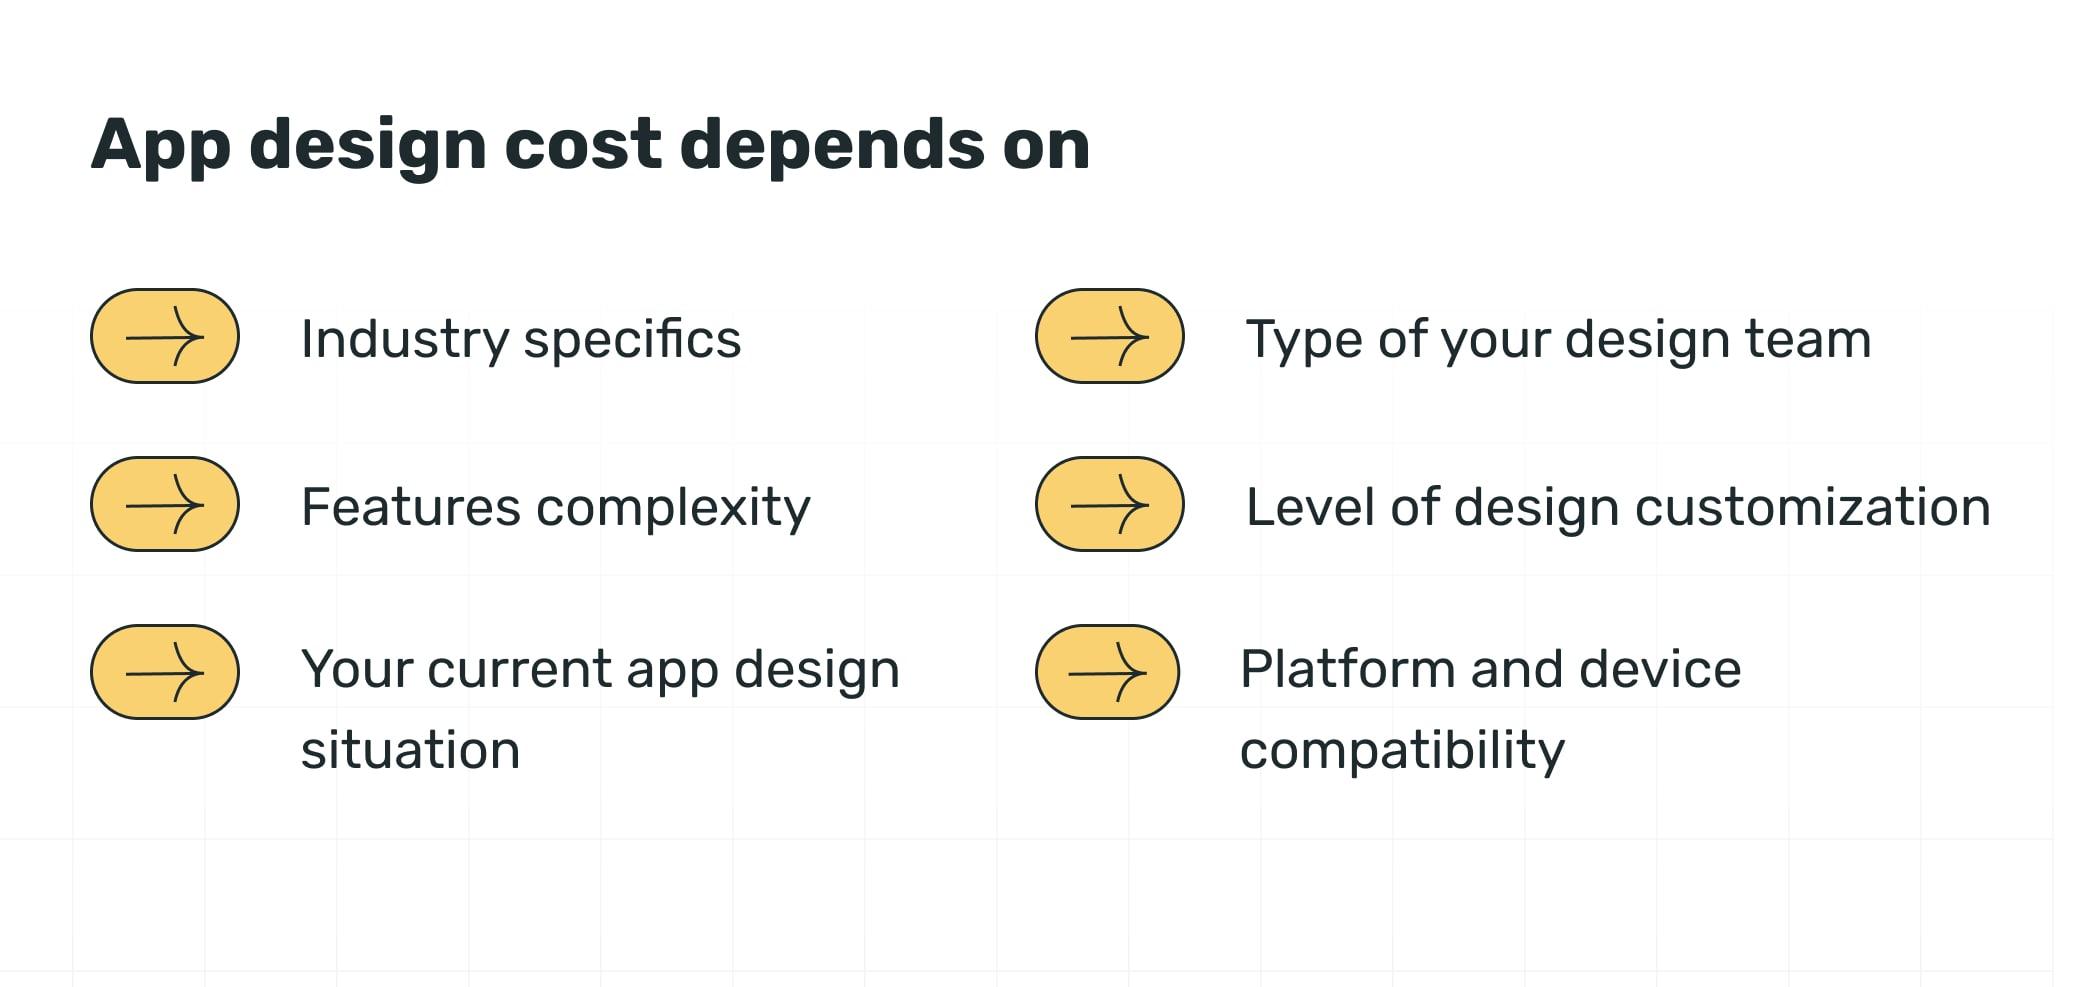 Mobile app design cost